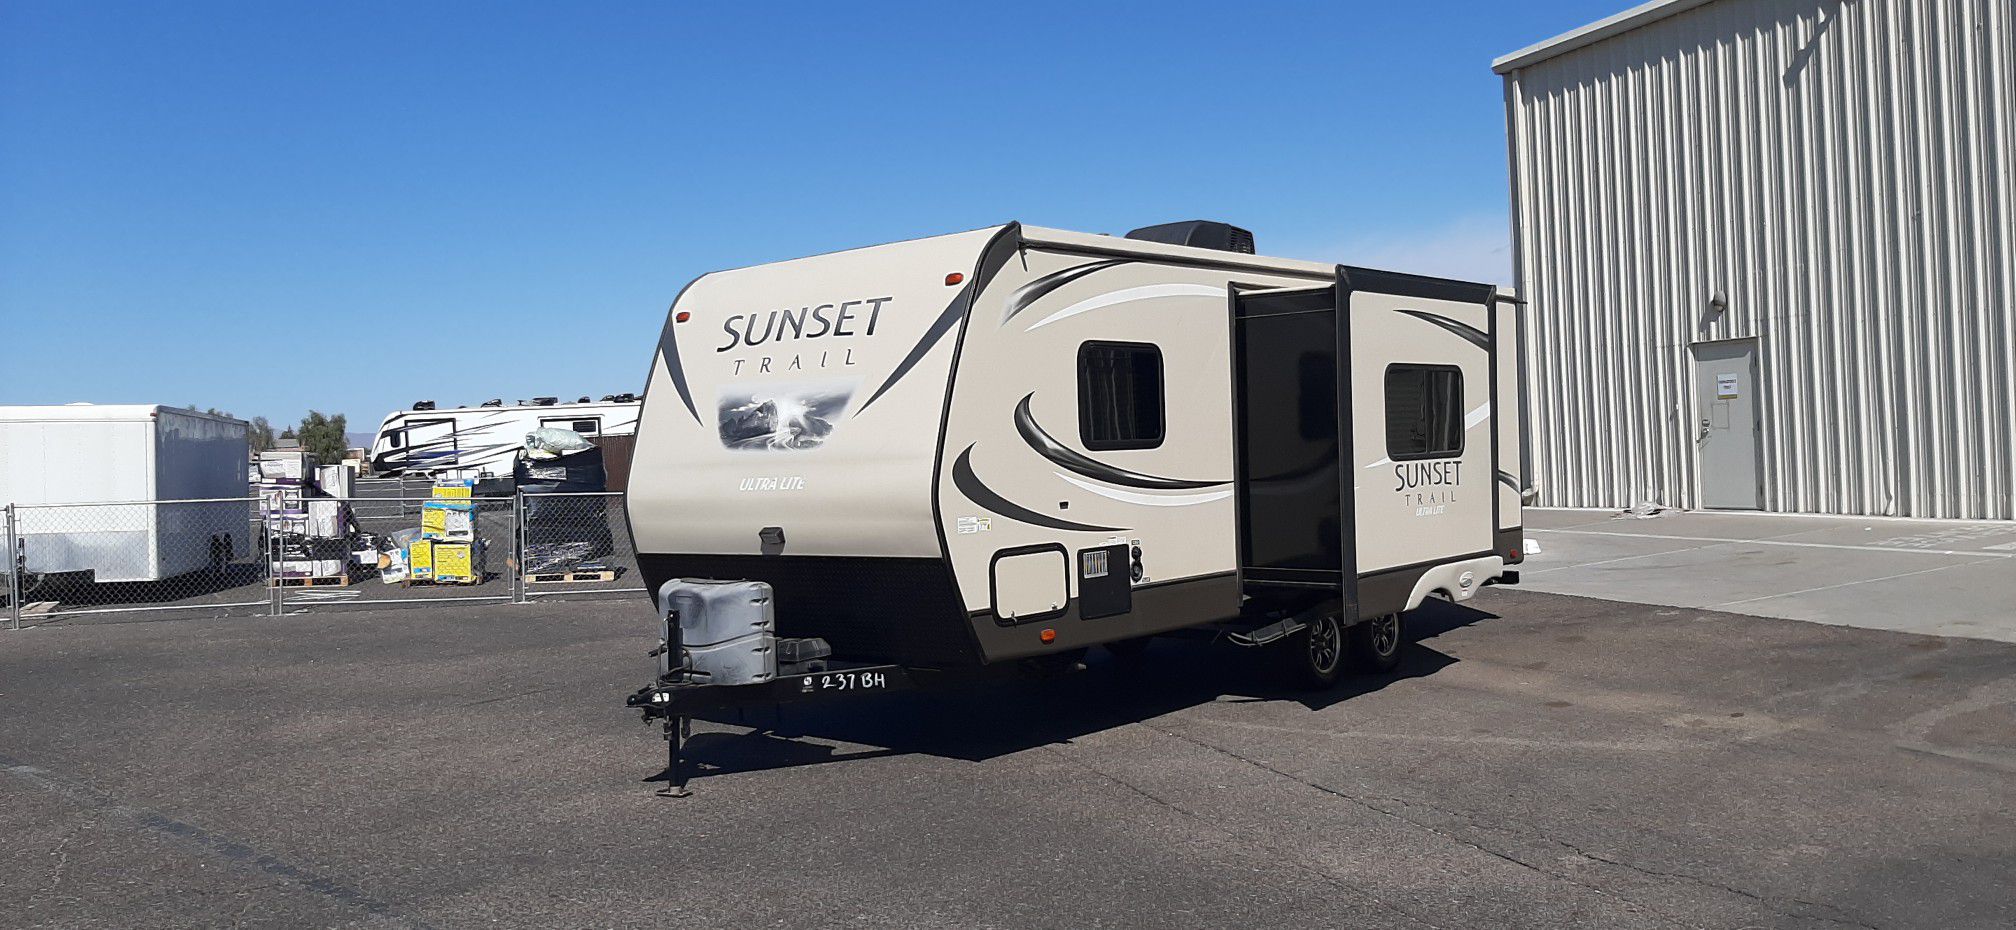 2016 sunset trail 237bh travel trailer camper